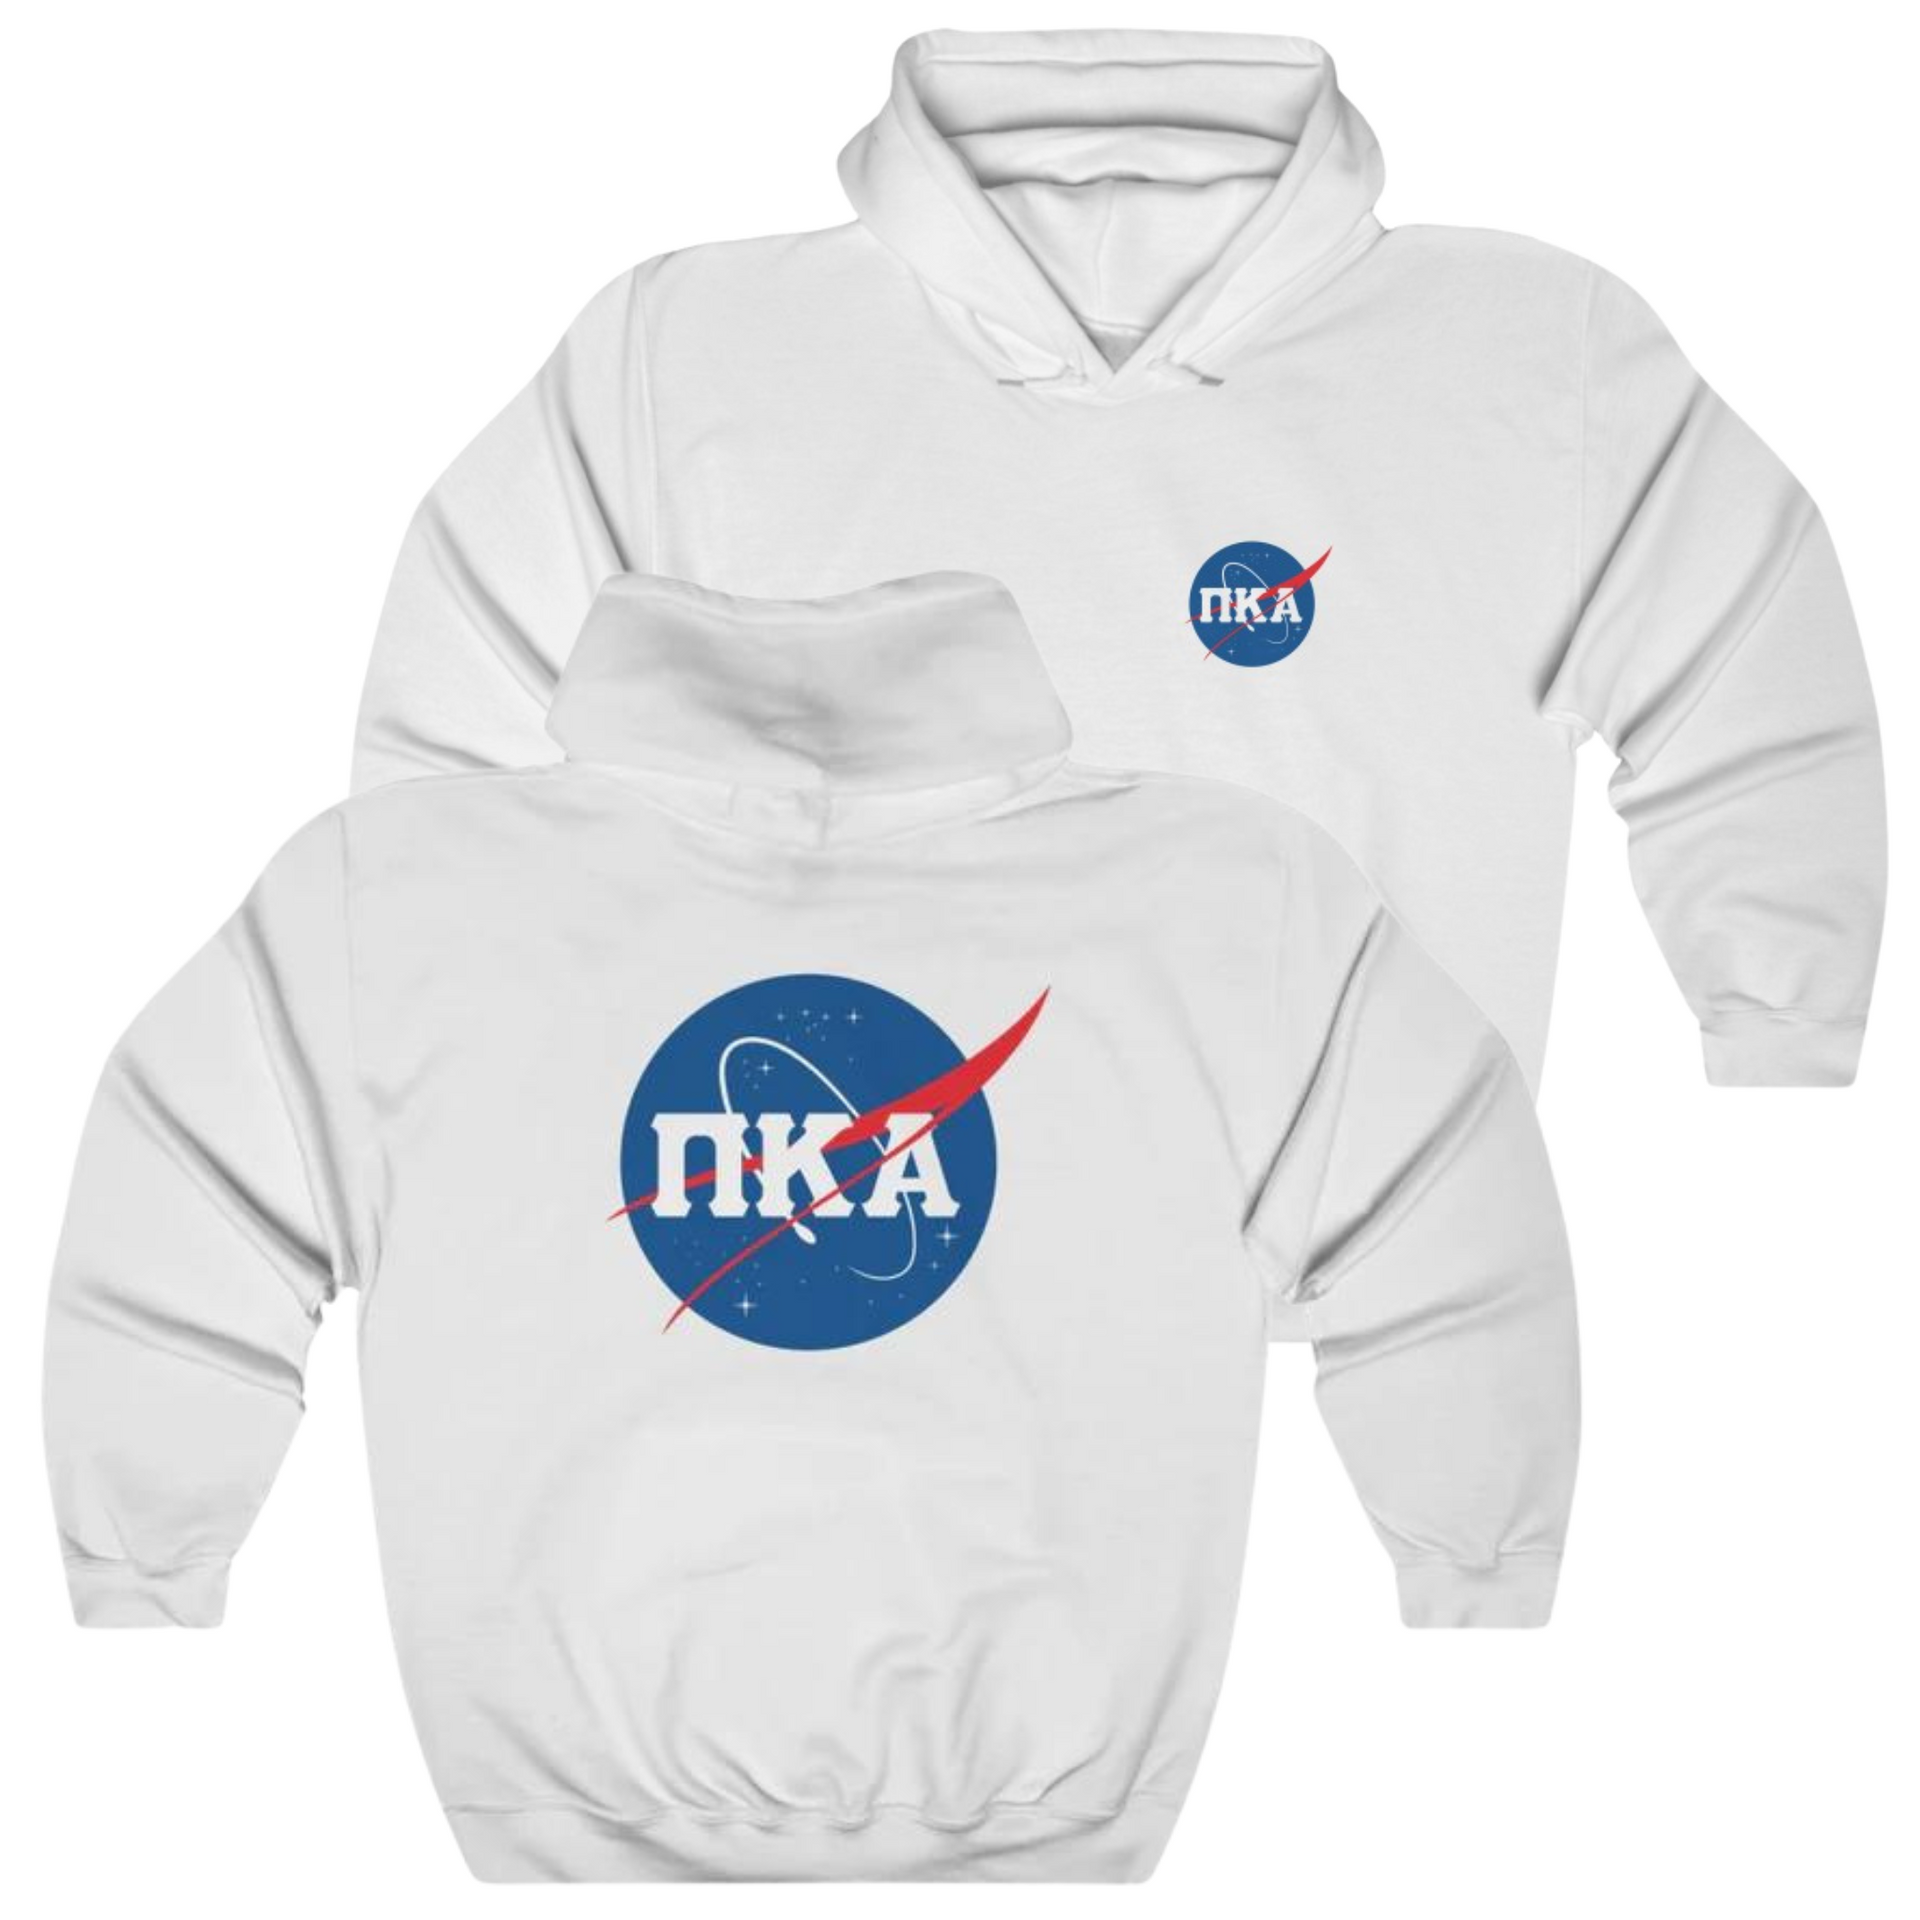 White Pi Kappa Alpha Graphic | Nasa 2.0 Hoodie | Pi kappa alpha fraternity shirt